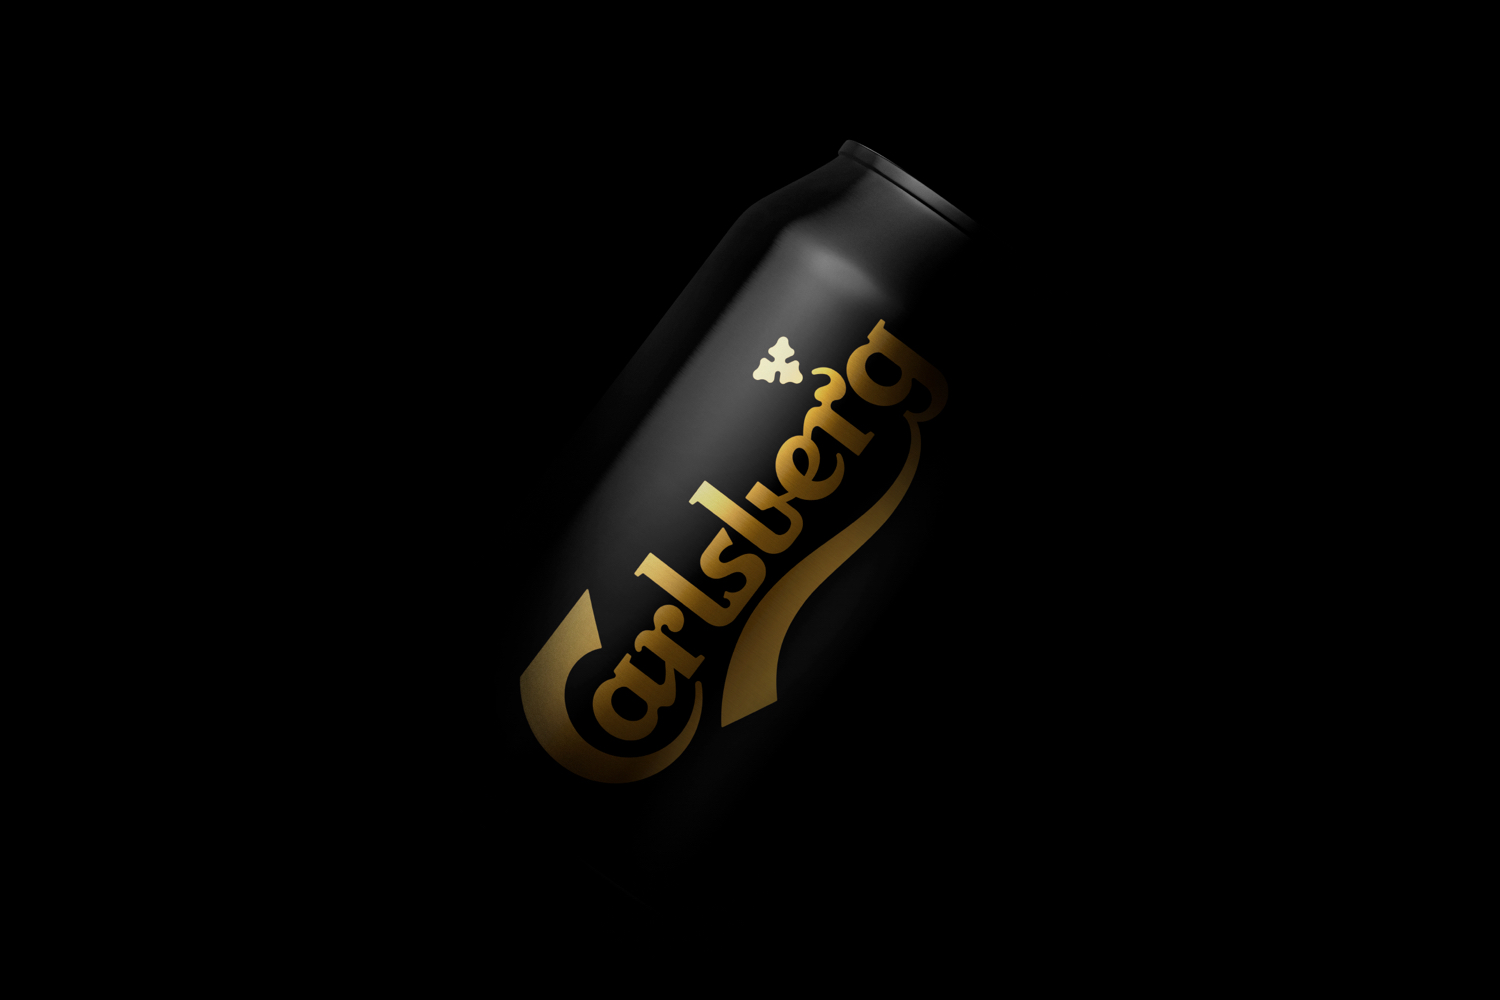 Minimal Packaging Design & Branding – Carlsberg Black Gold by Kontrapunkt, Denmark